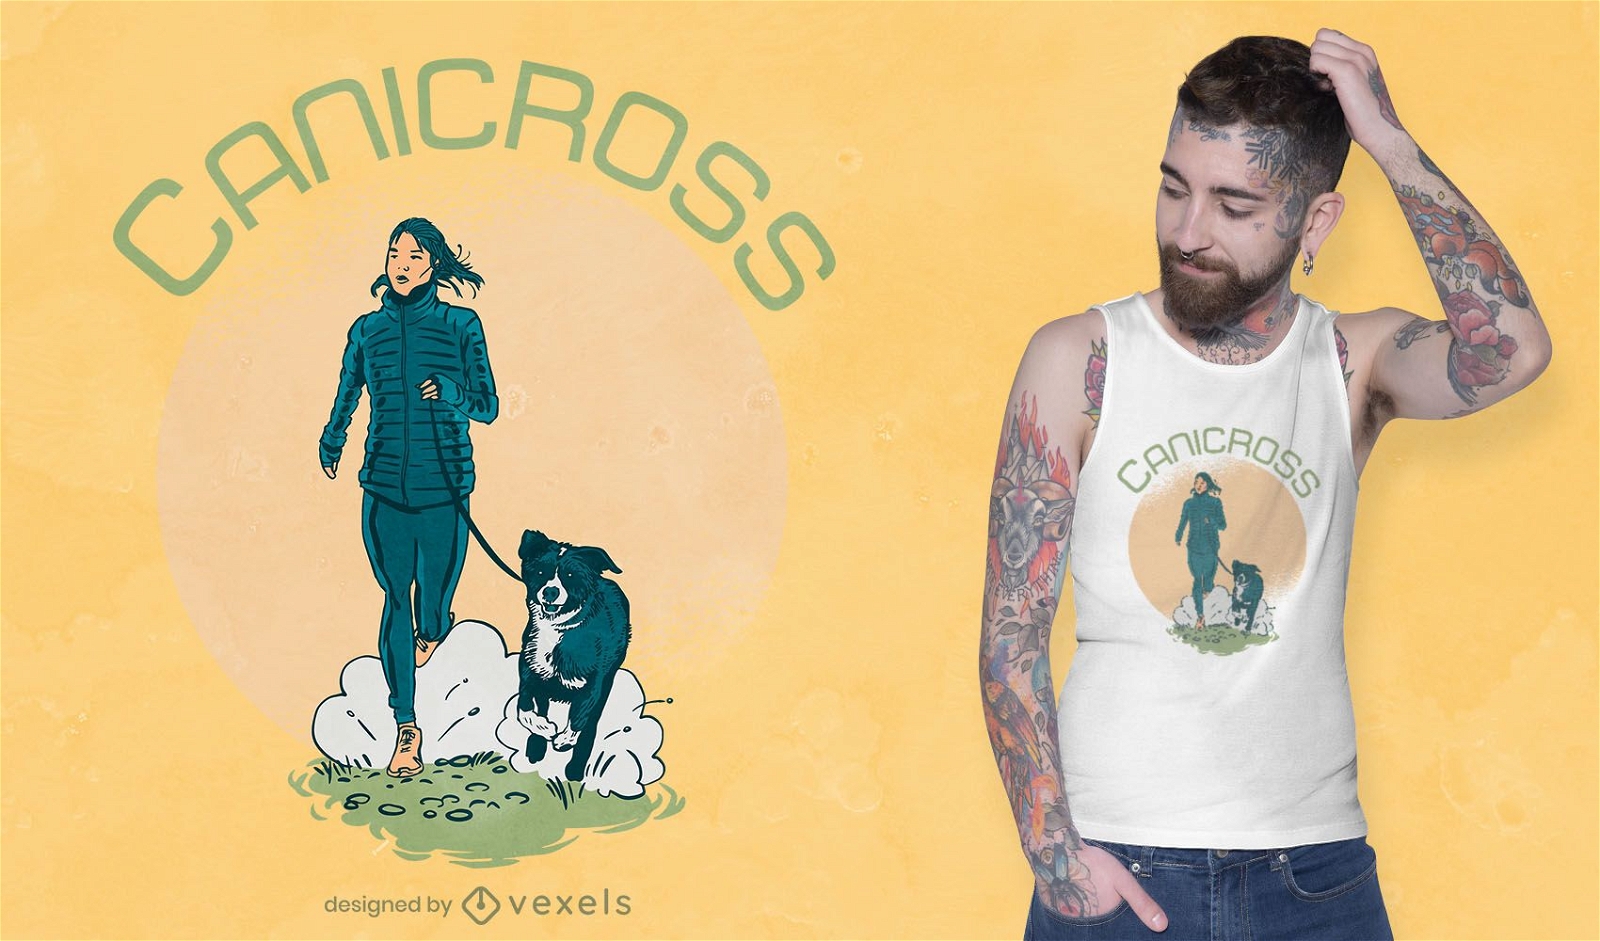 Canicross dog t-shirt design